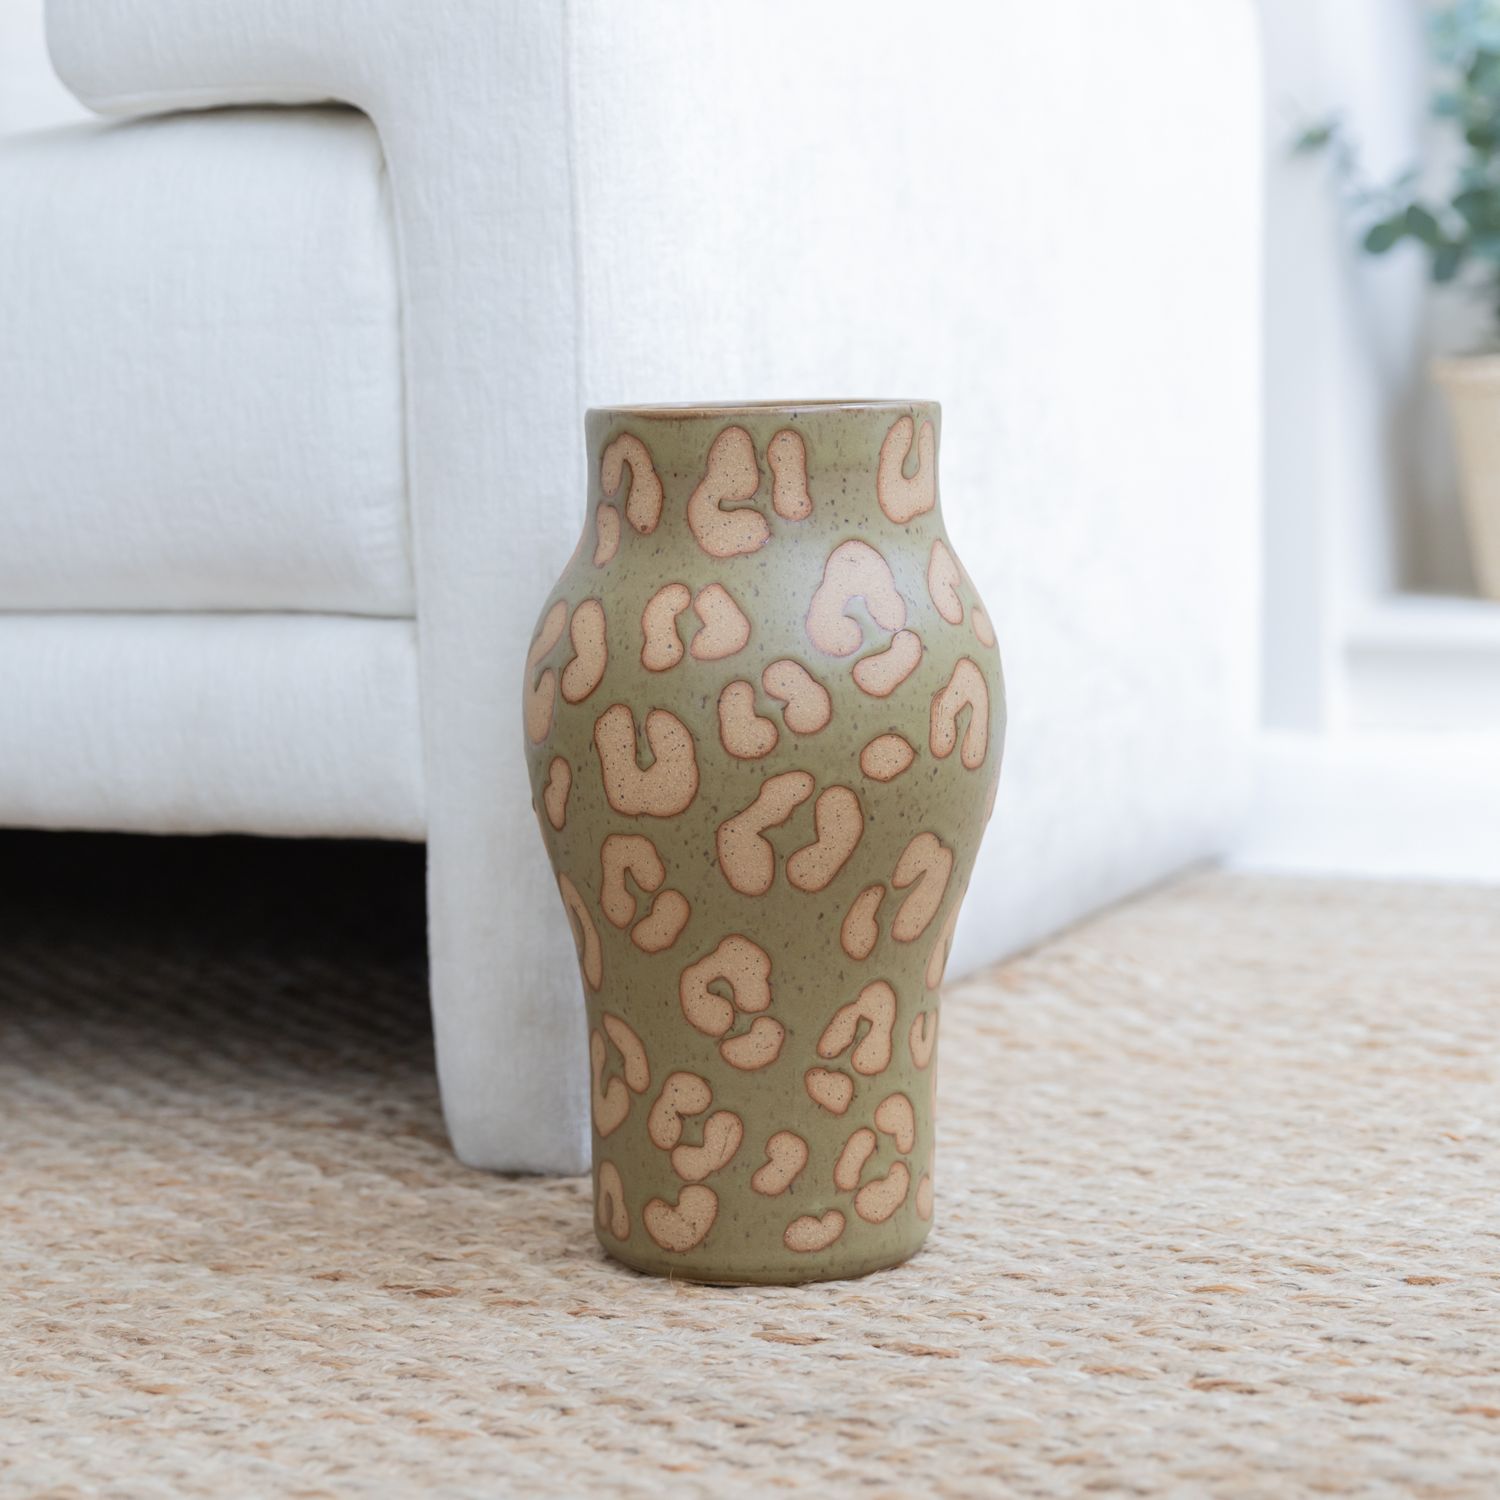 Mima Ceramics: Green Print Vessel no. 1 Product Image 1 of 3